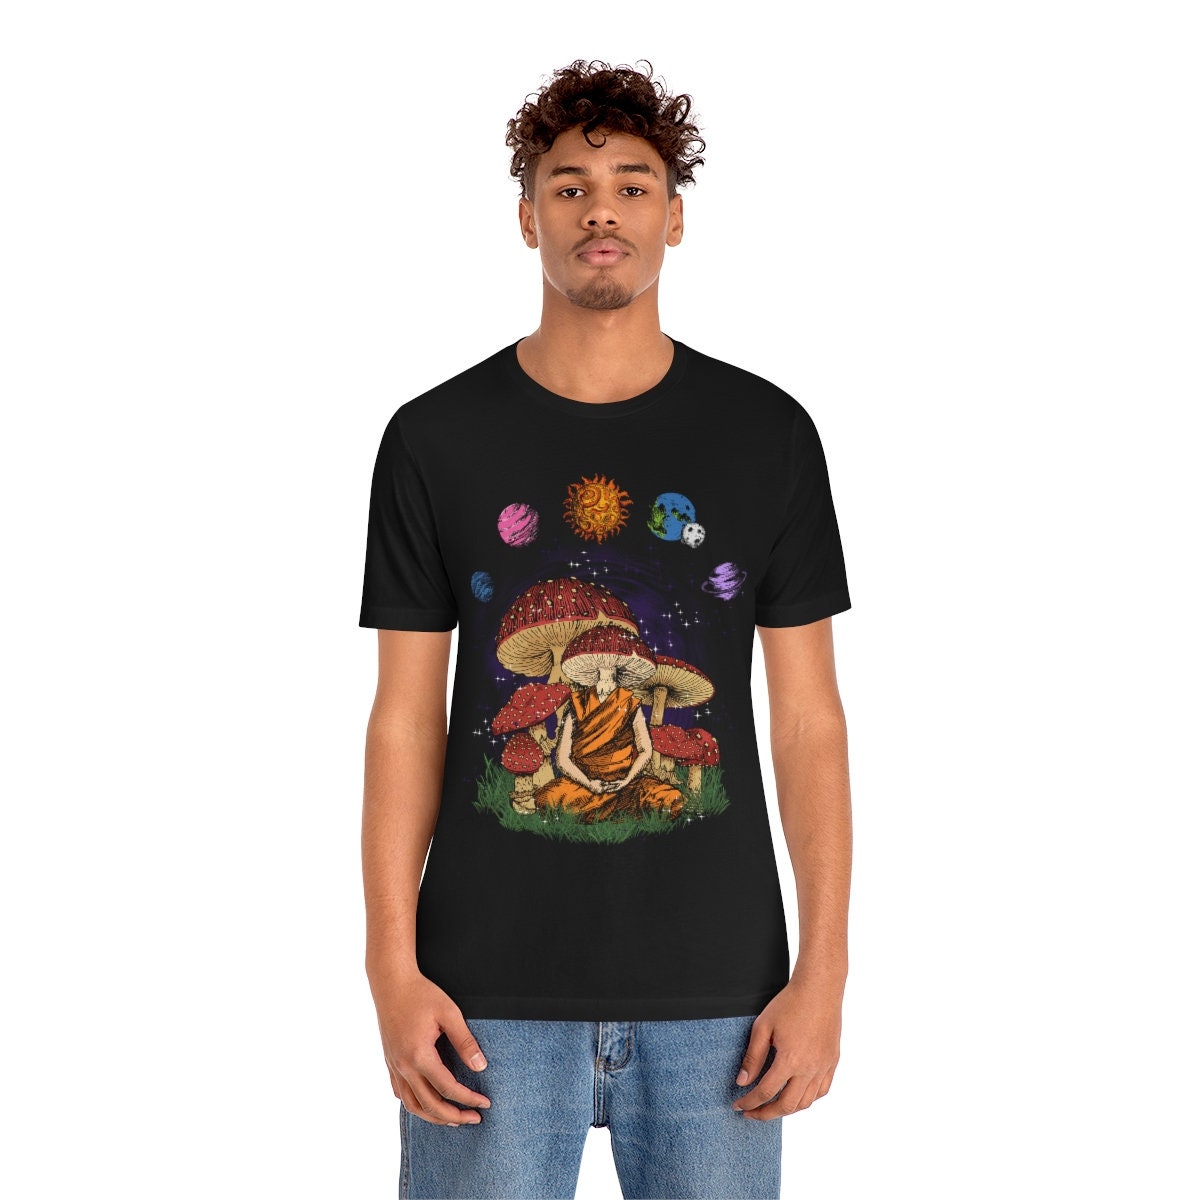 Discover Meditating Mushroom Graphic T-Shirt